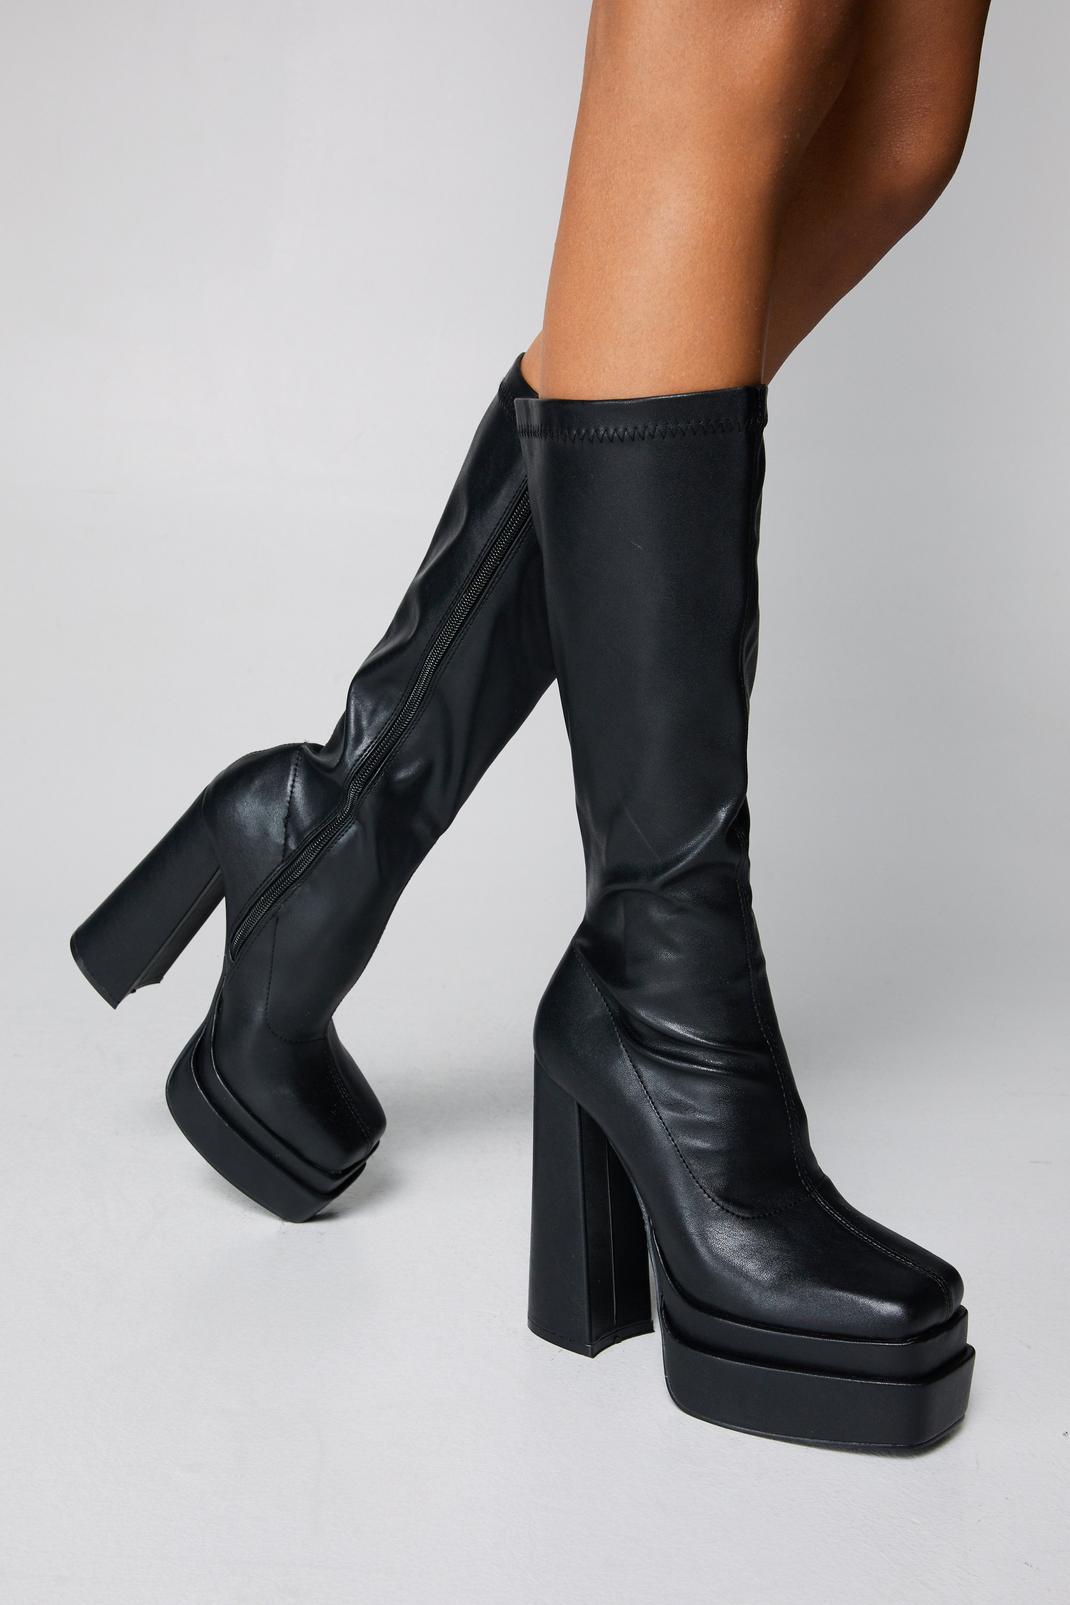 Knee High Stocking Boots Flash Sales | bellvalefarms.com